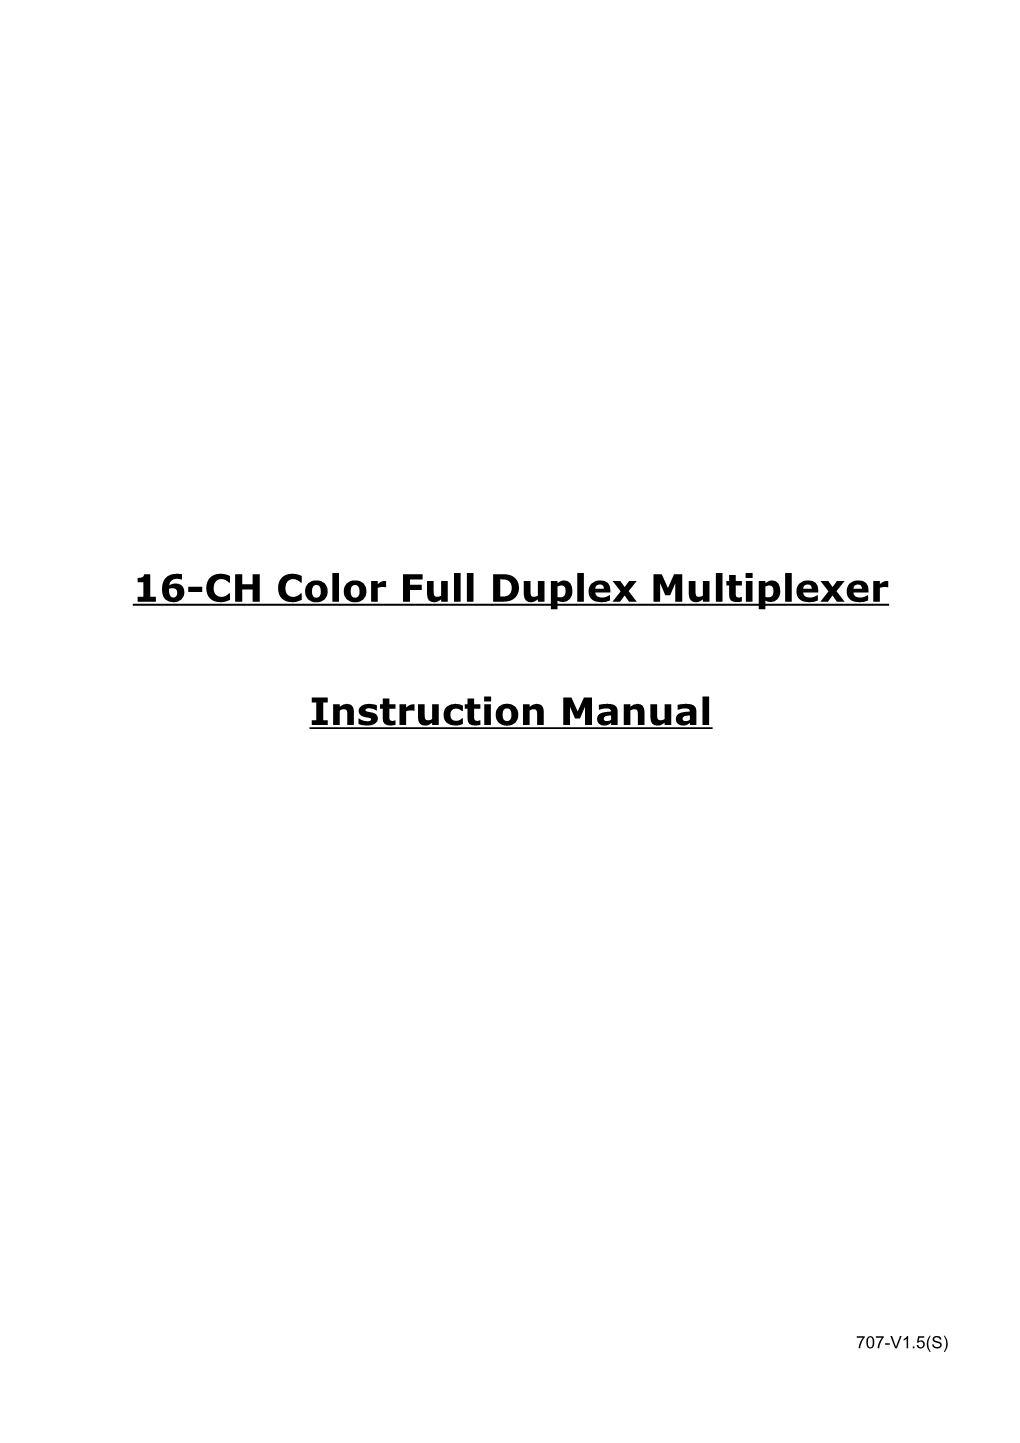 16-CH Color Full Duplex Multiplexer